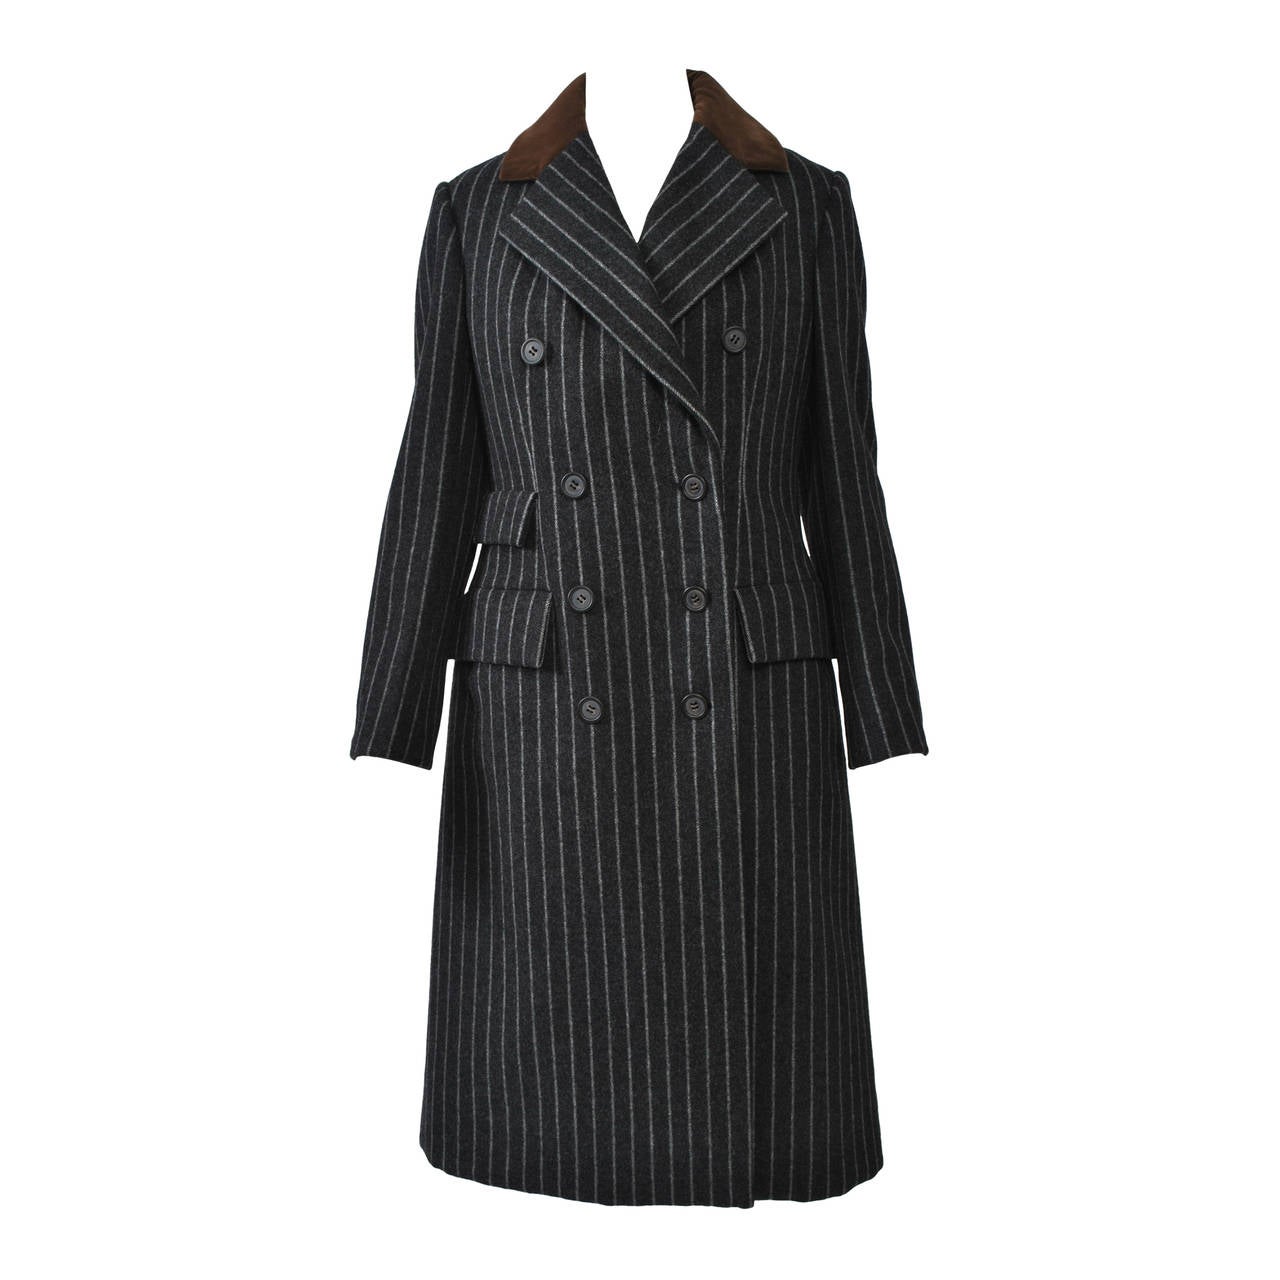 Bill Blass Pinstripe Coat Suit